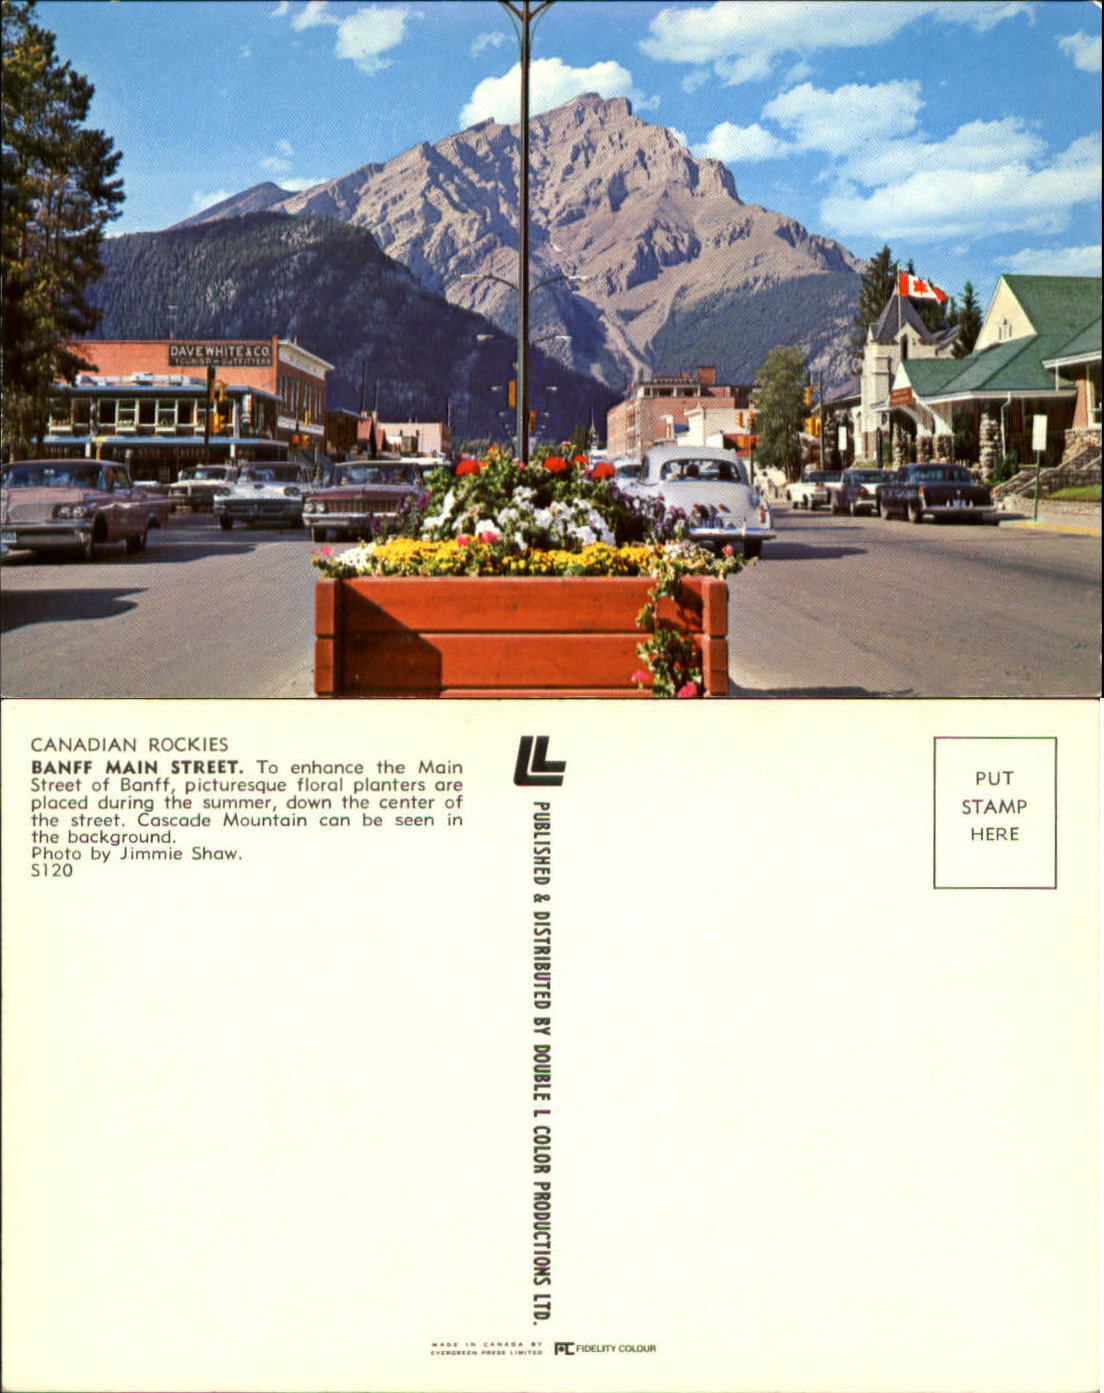 Cascade Mountain Banff Main Street Canadian Rockies Alberta Canada 1960s